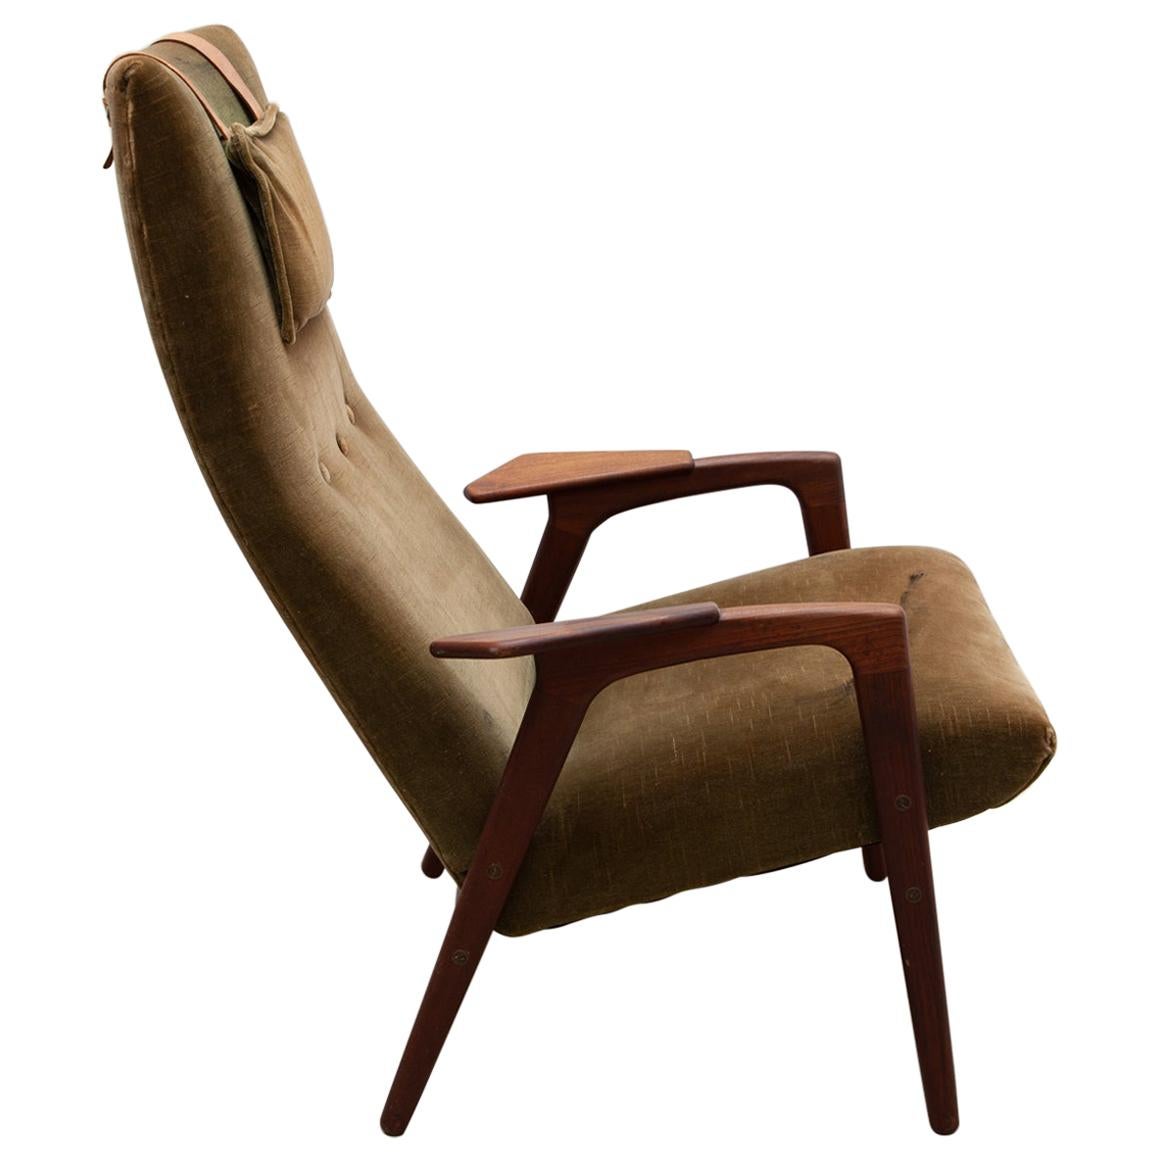 Lounge Reading Chair Designed by Yngve Ekström for Pastoe the Netherlands